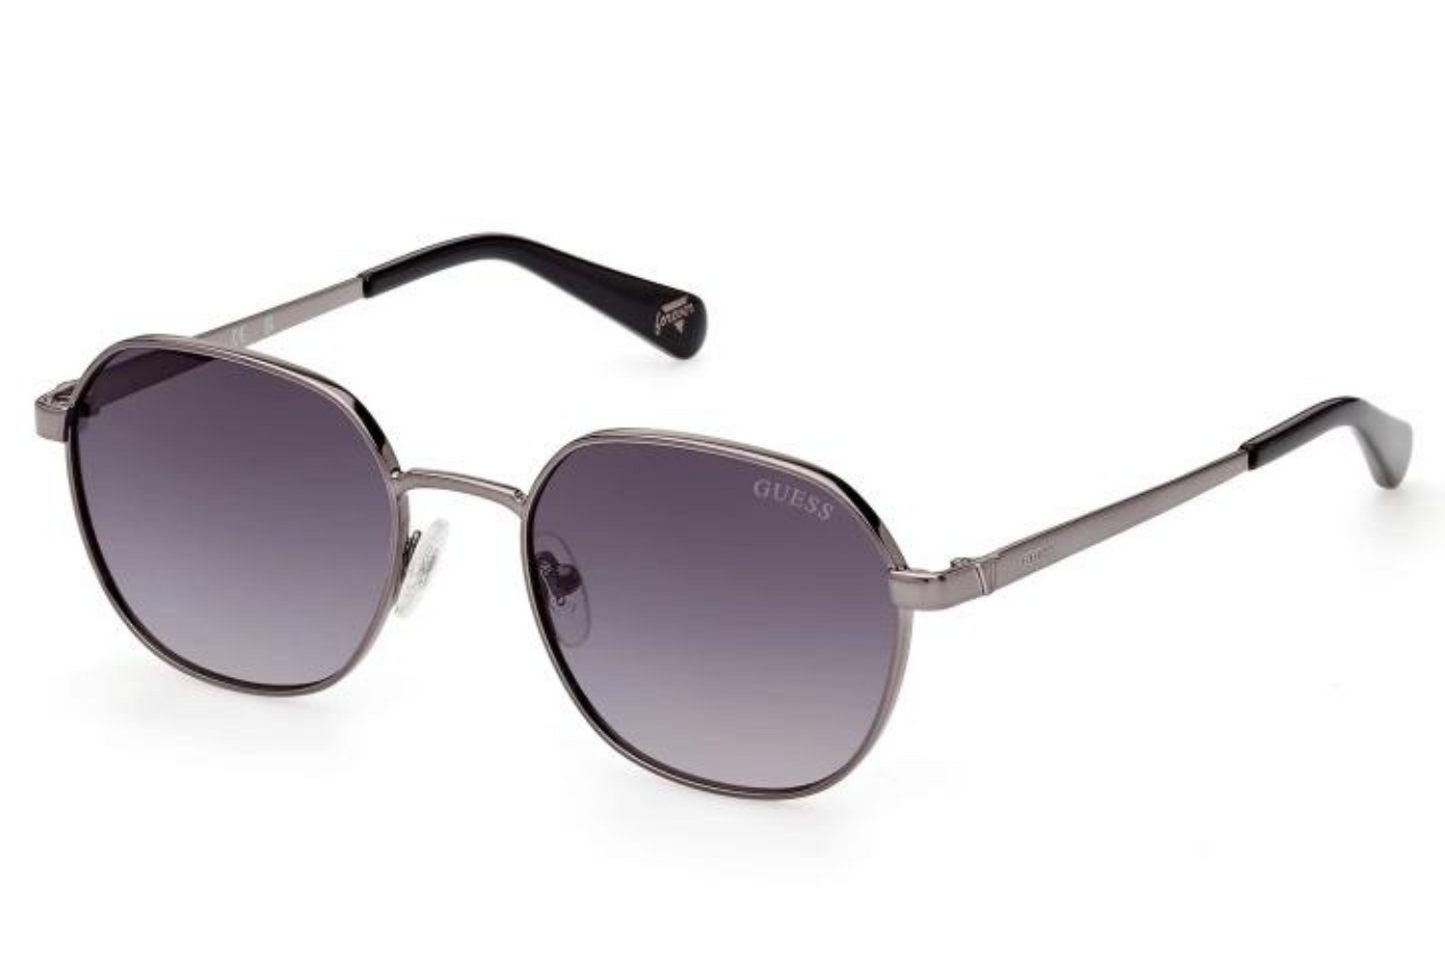 Guess Sunglasses S5215